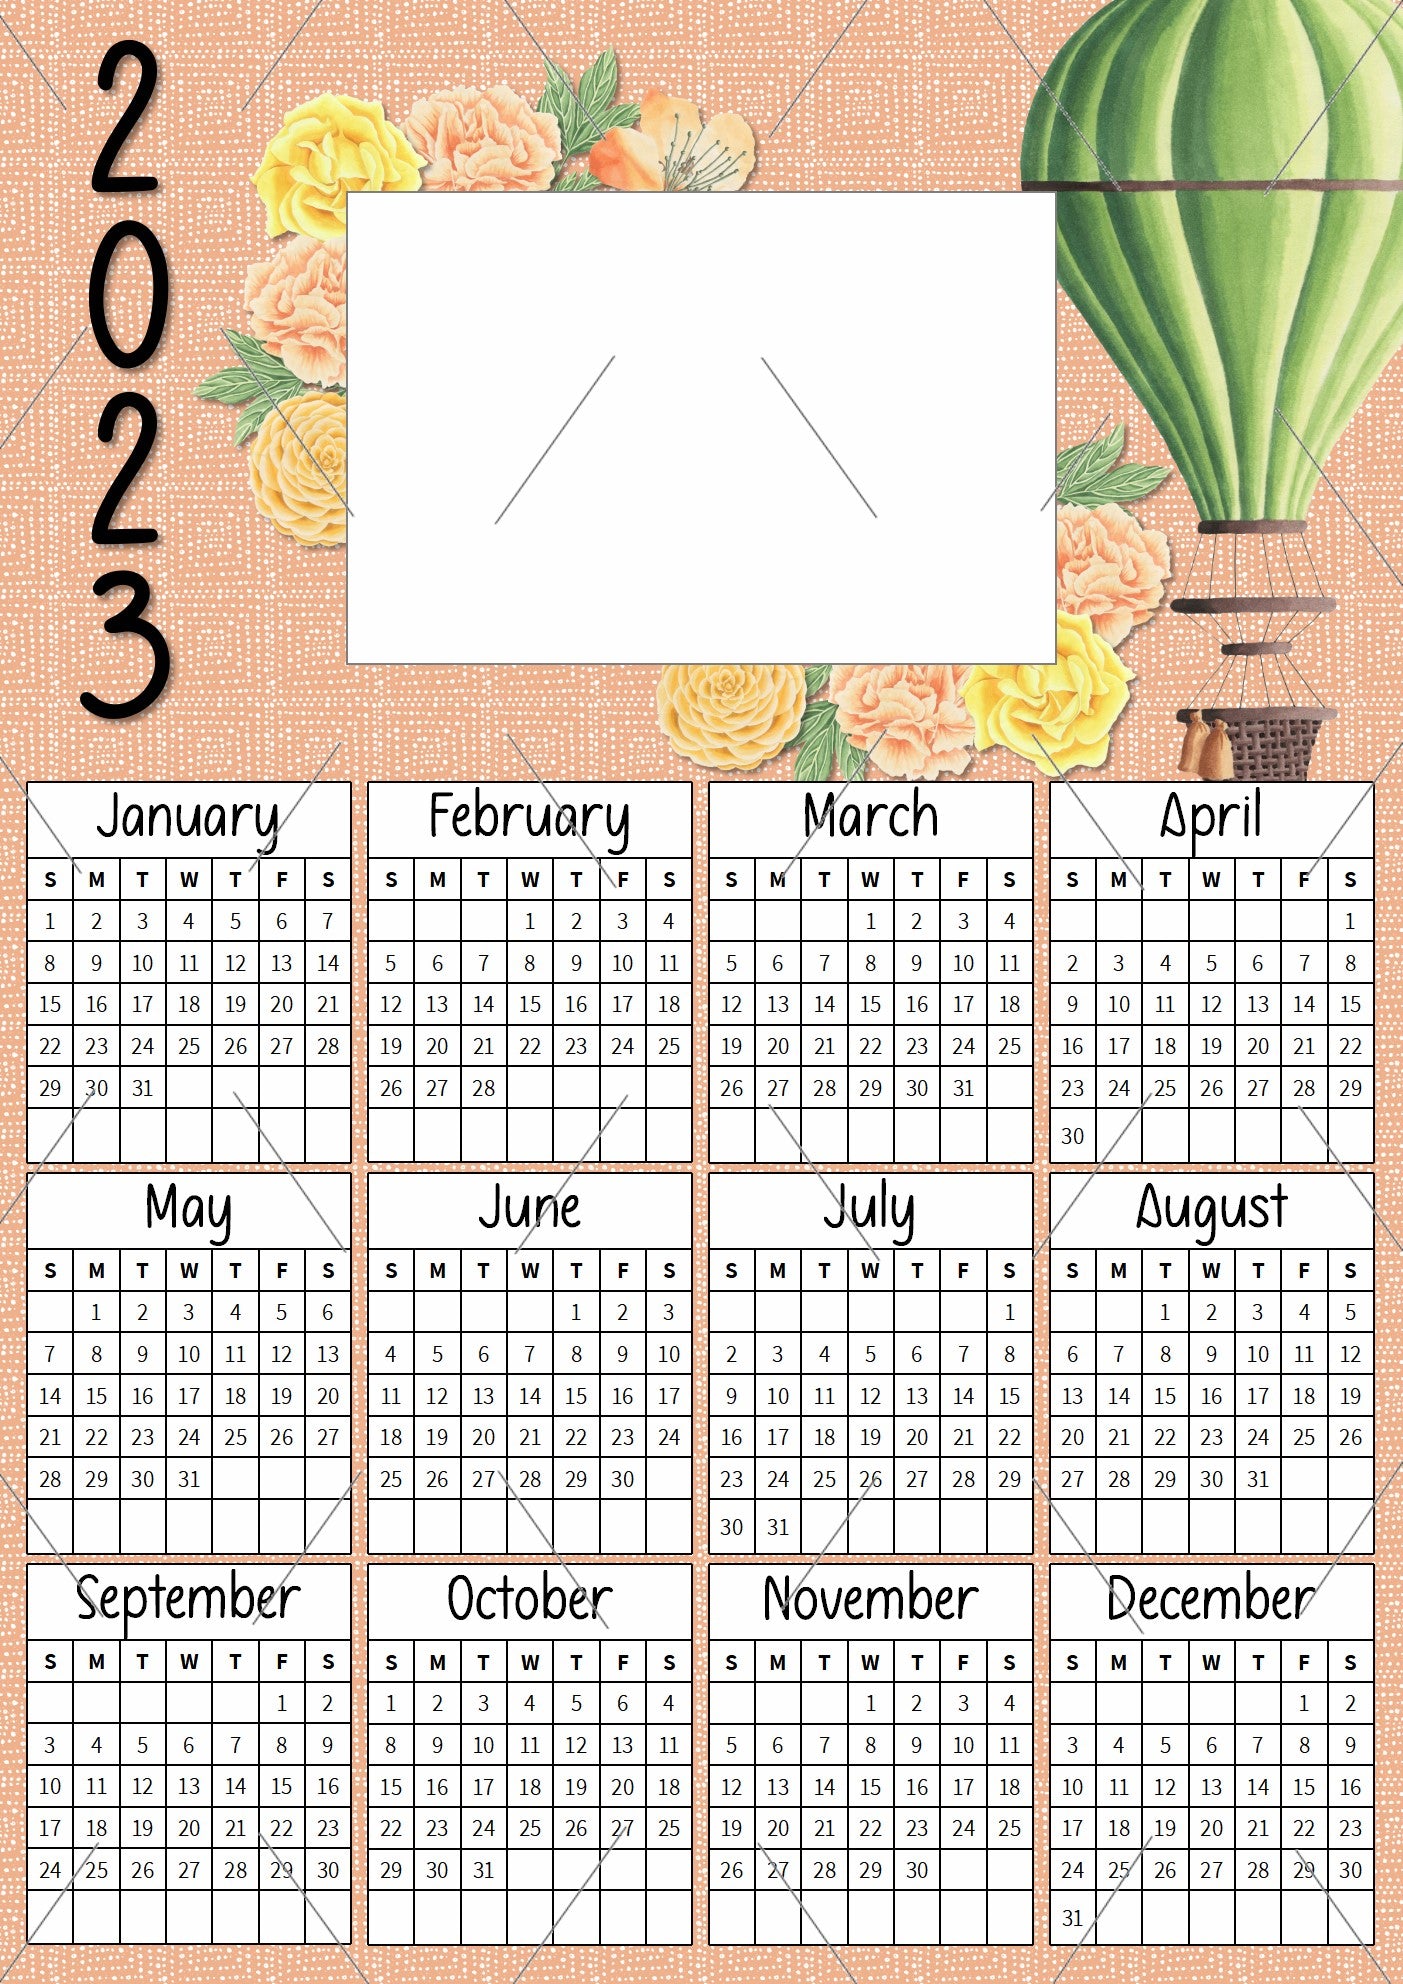 READY TO PRINT:   2023 Calendar - Happy